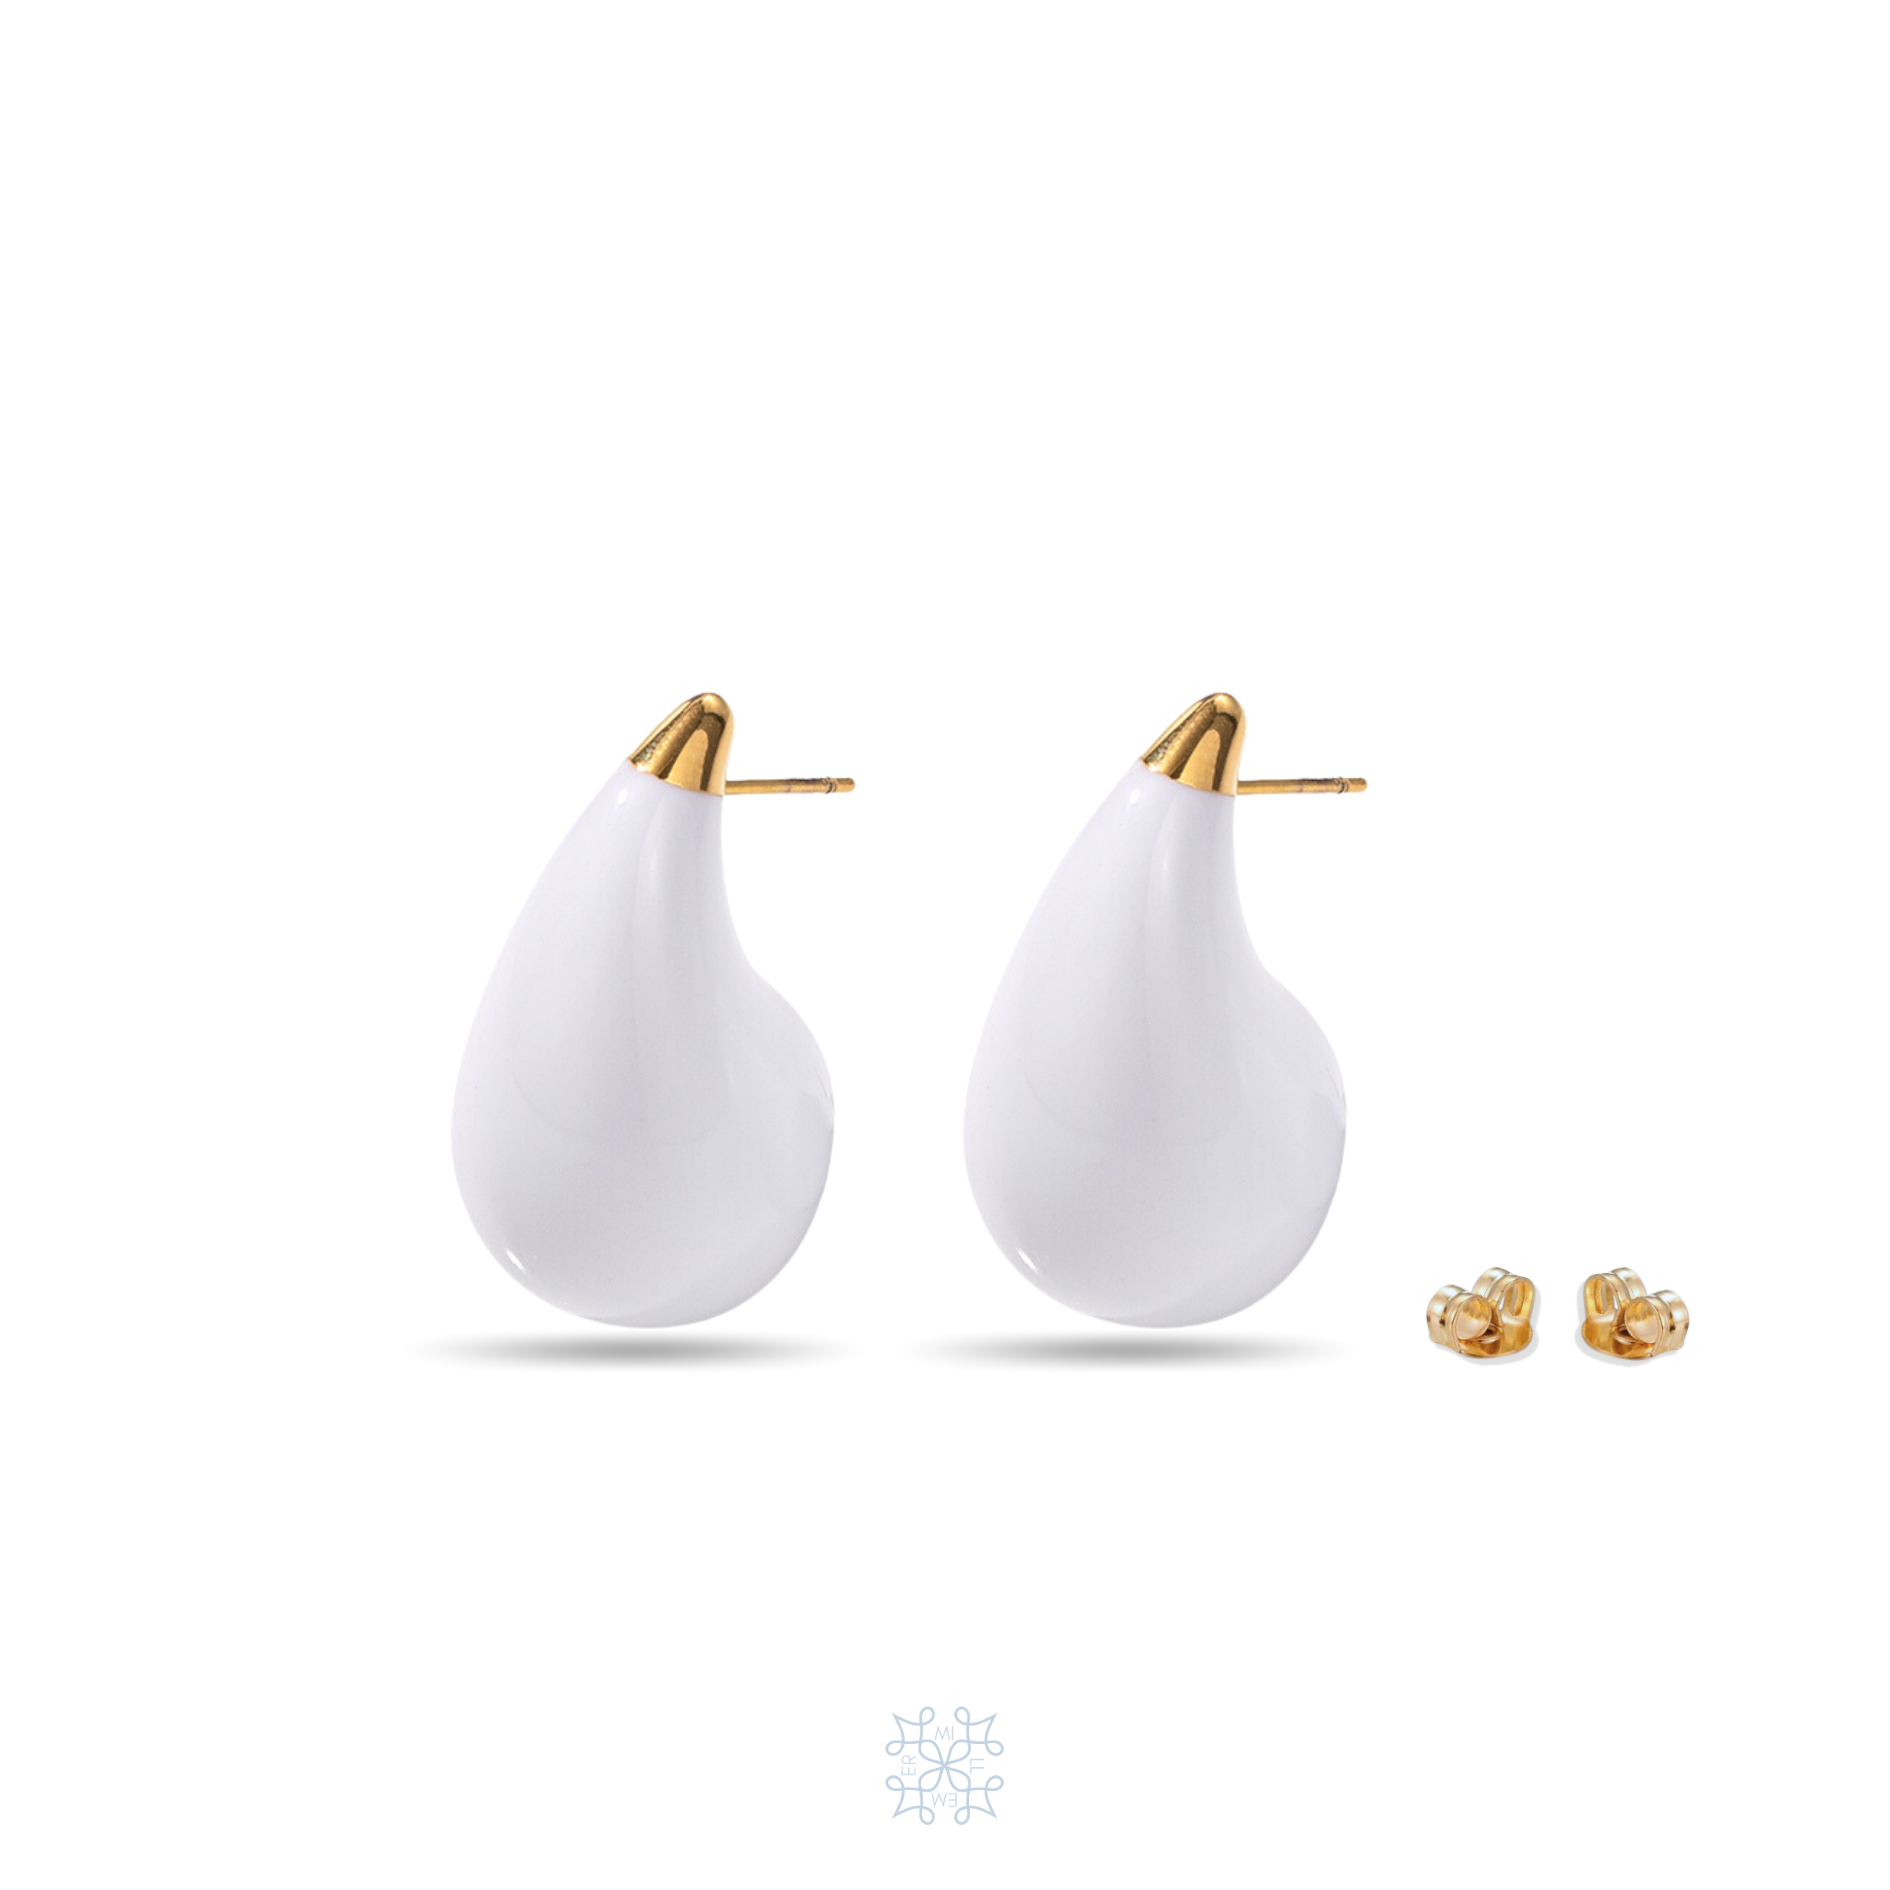 WATERDROP White Enamel Gold Earrings. Gold Earrings in the shape of a waterdrop painted in white enamel all the surface of it. 